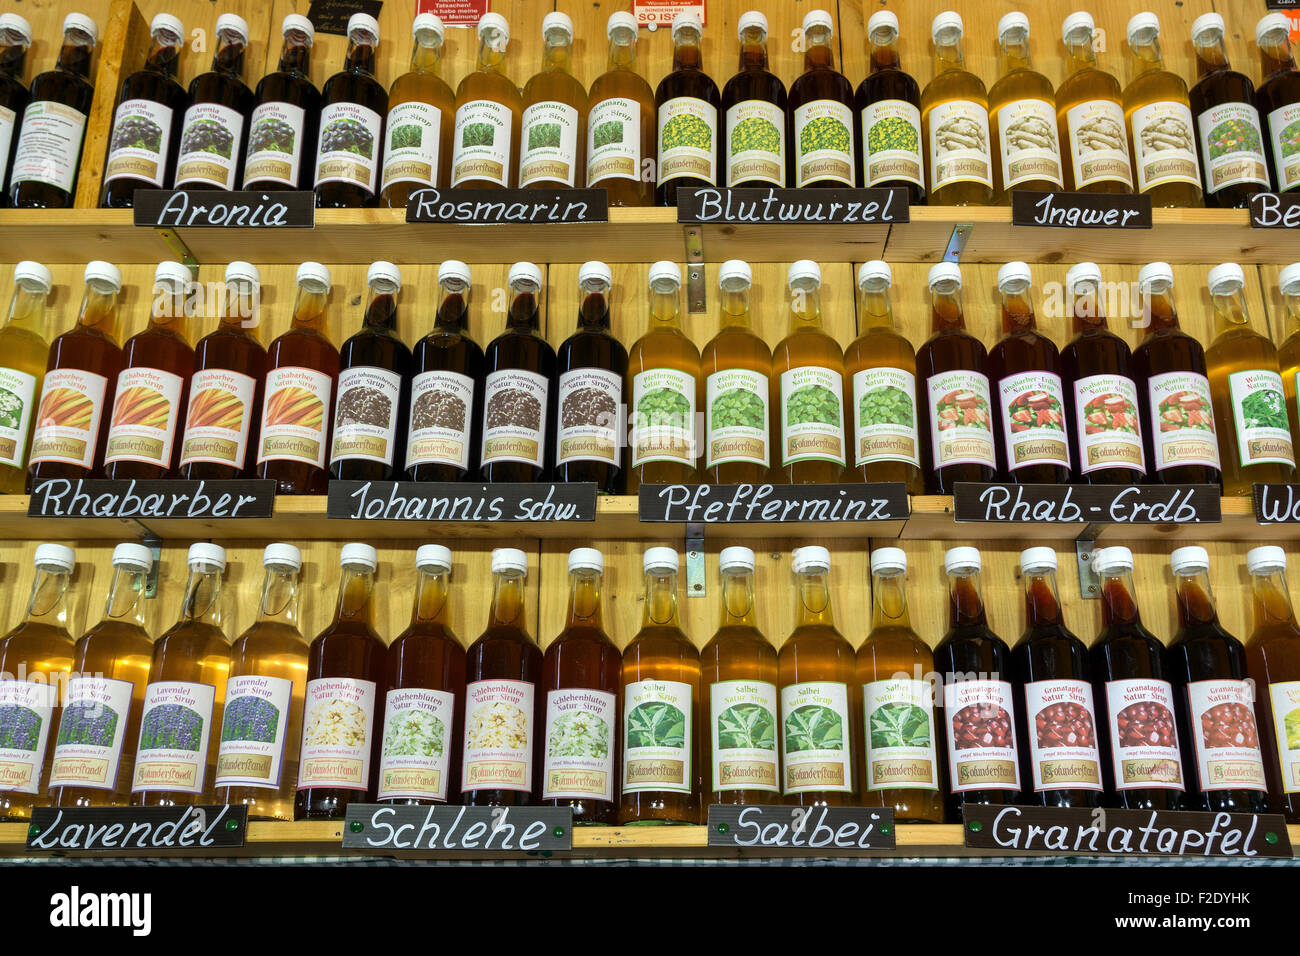 Syrups, different varieties, bottles in a stall, Vikutalienmarkt, Munich, Bavaria, Germany Stock Photo